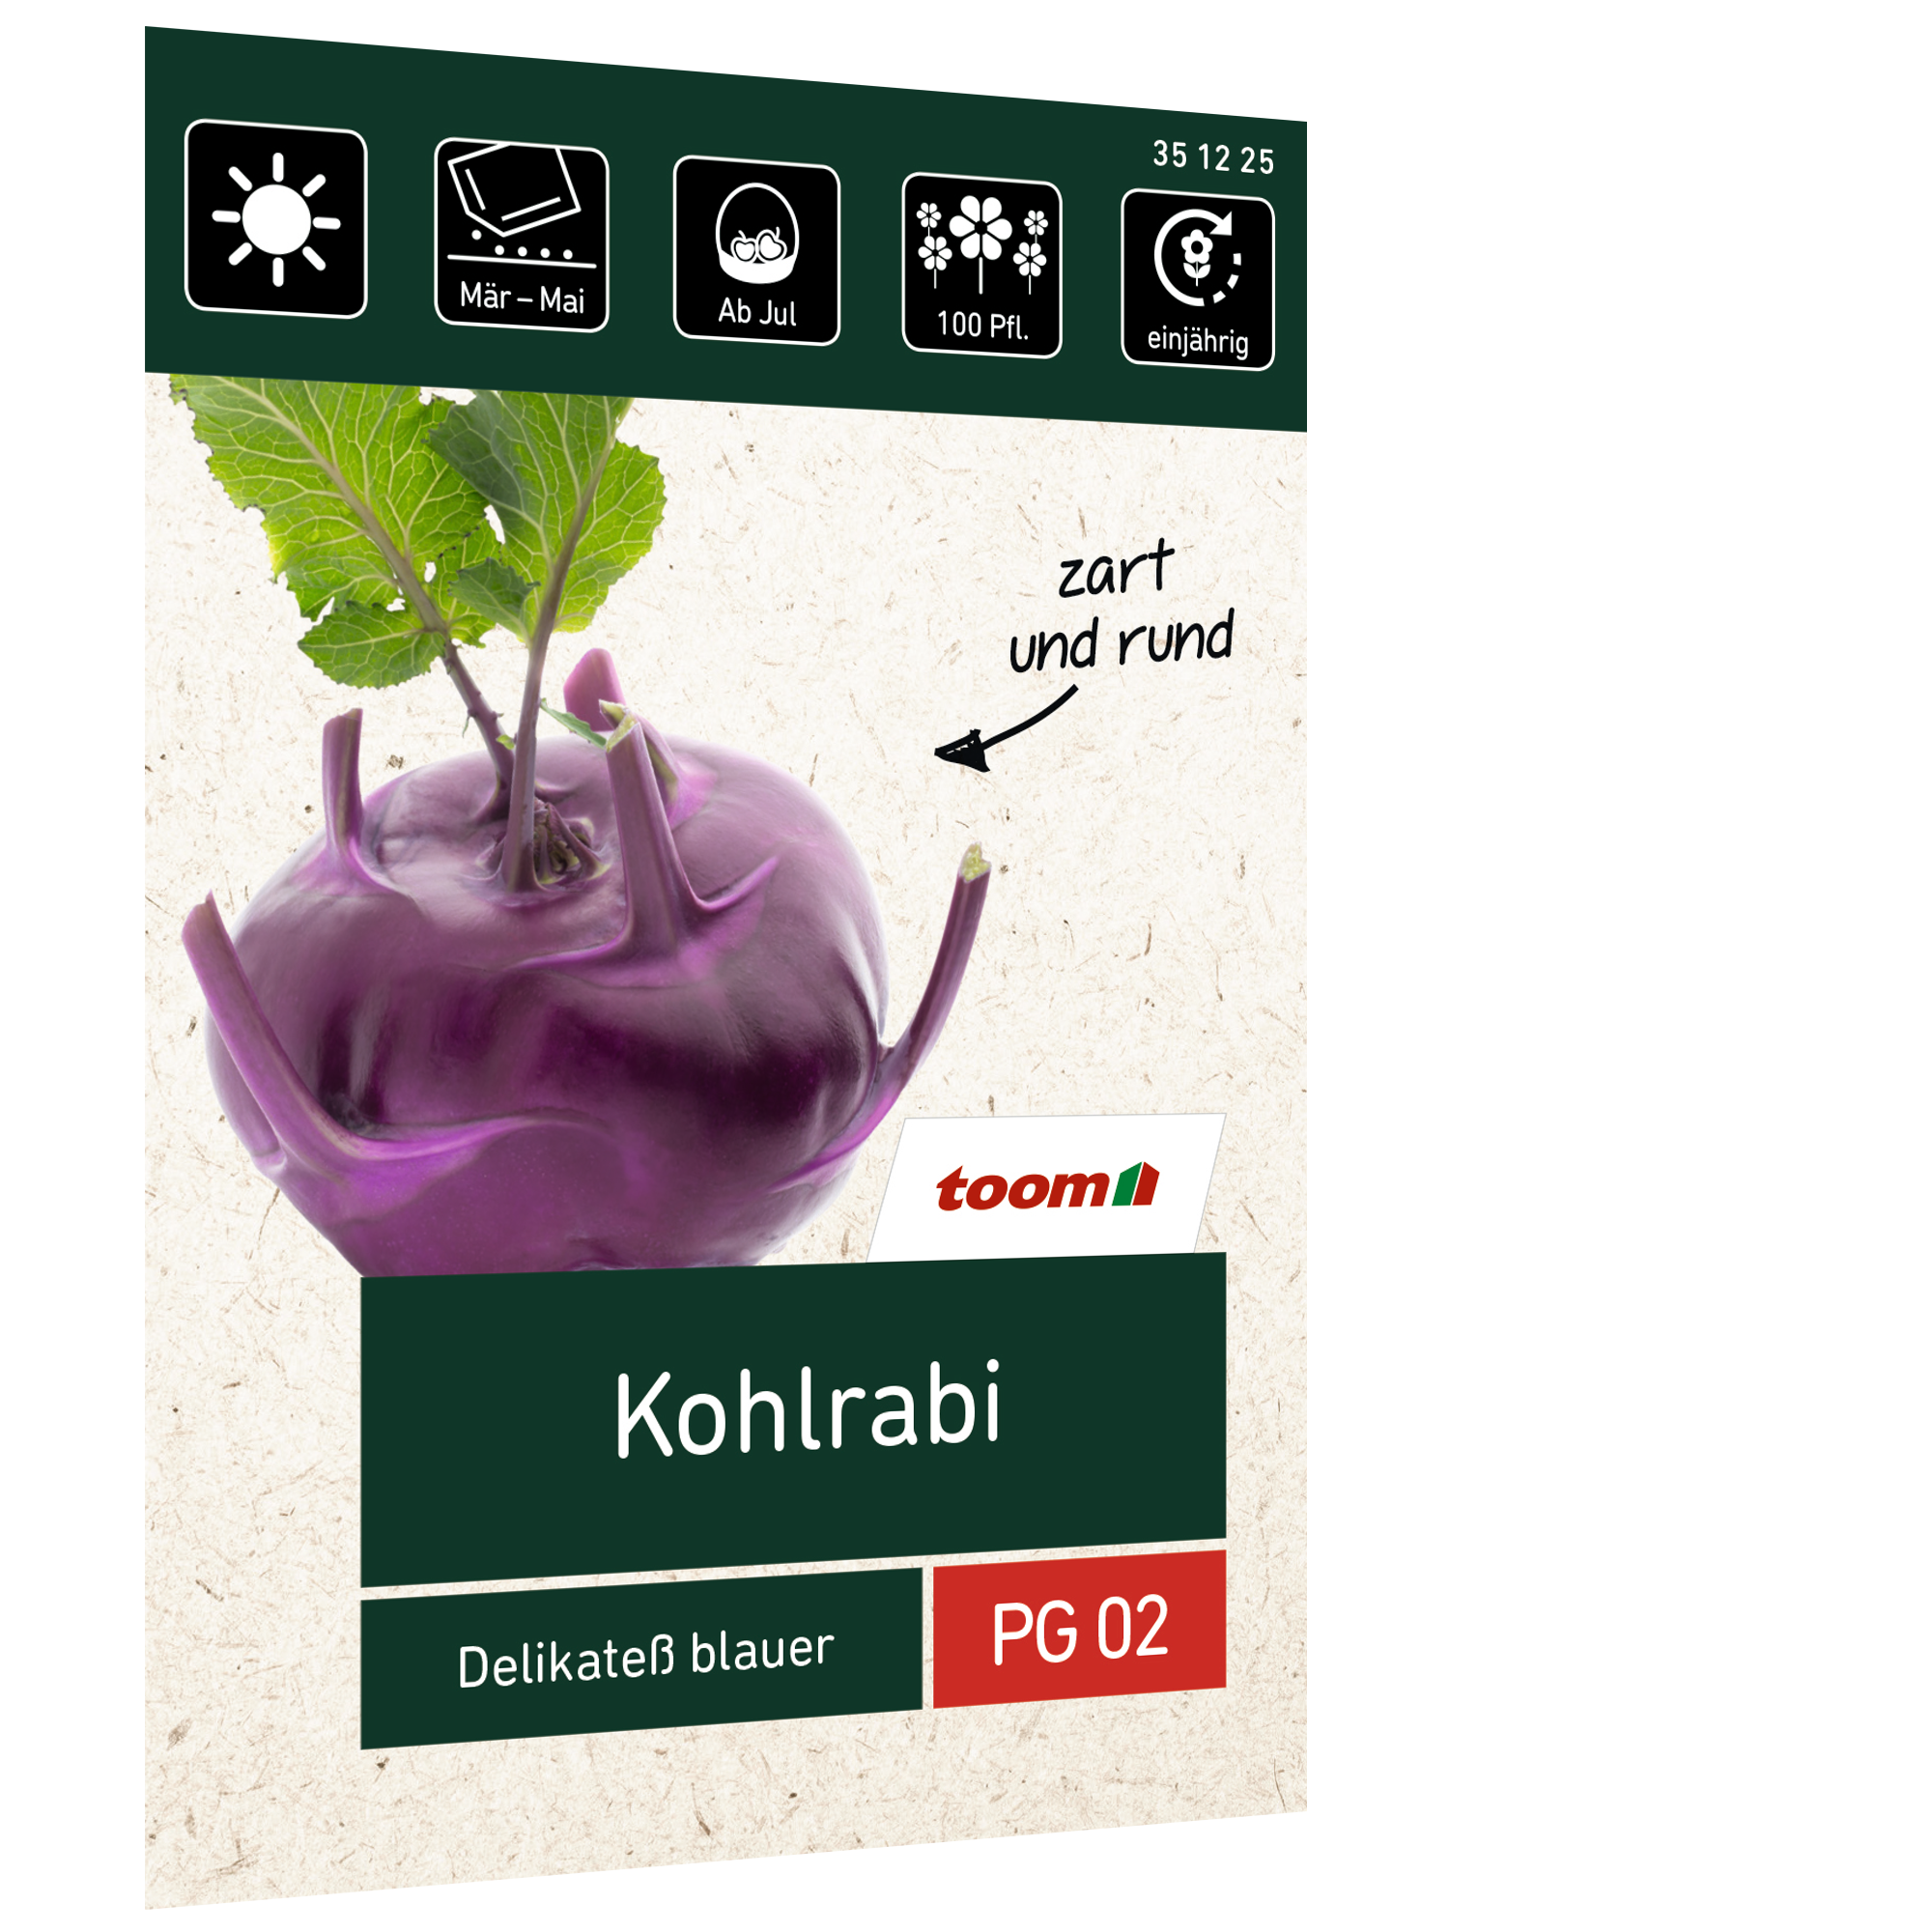 Kohlrabi 'Delikatess blauer' + product picture